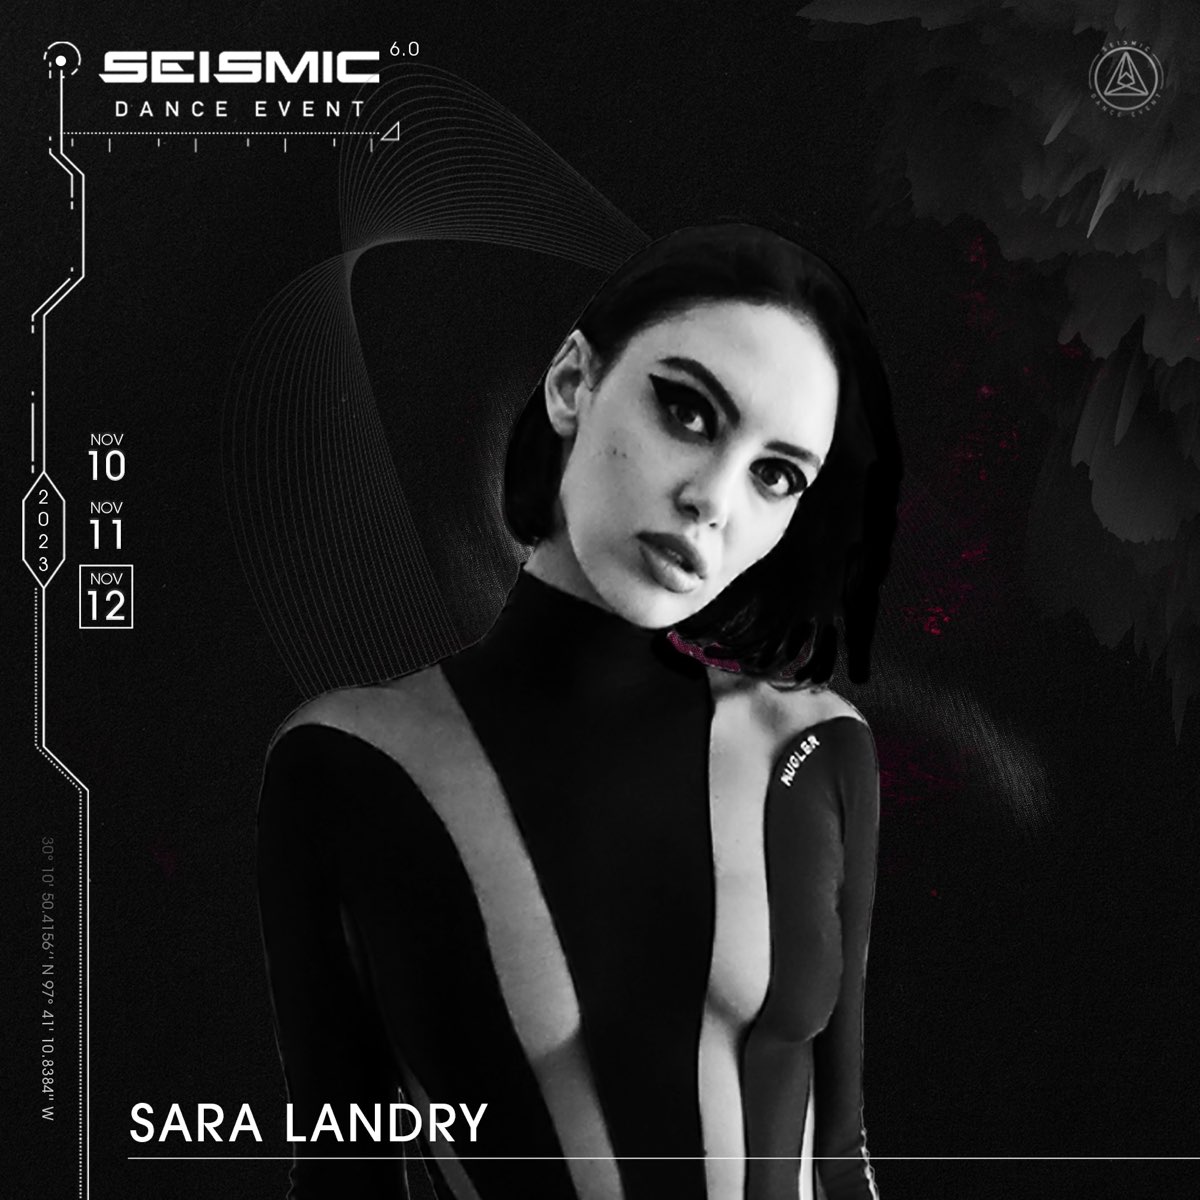 Sara Landry at Seismic Dance Event 6.0 (DJ Mix) - Album by Sara Landry -  Apple Music